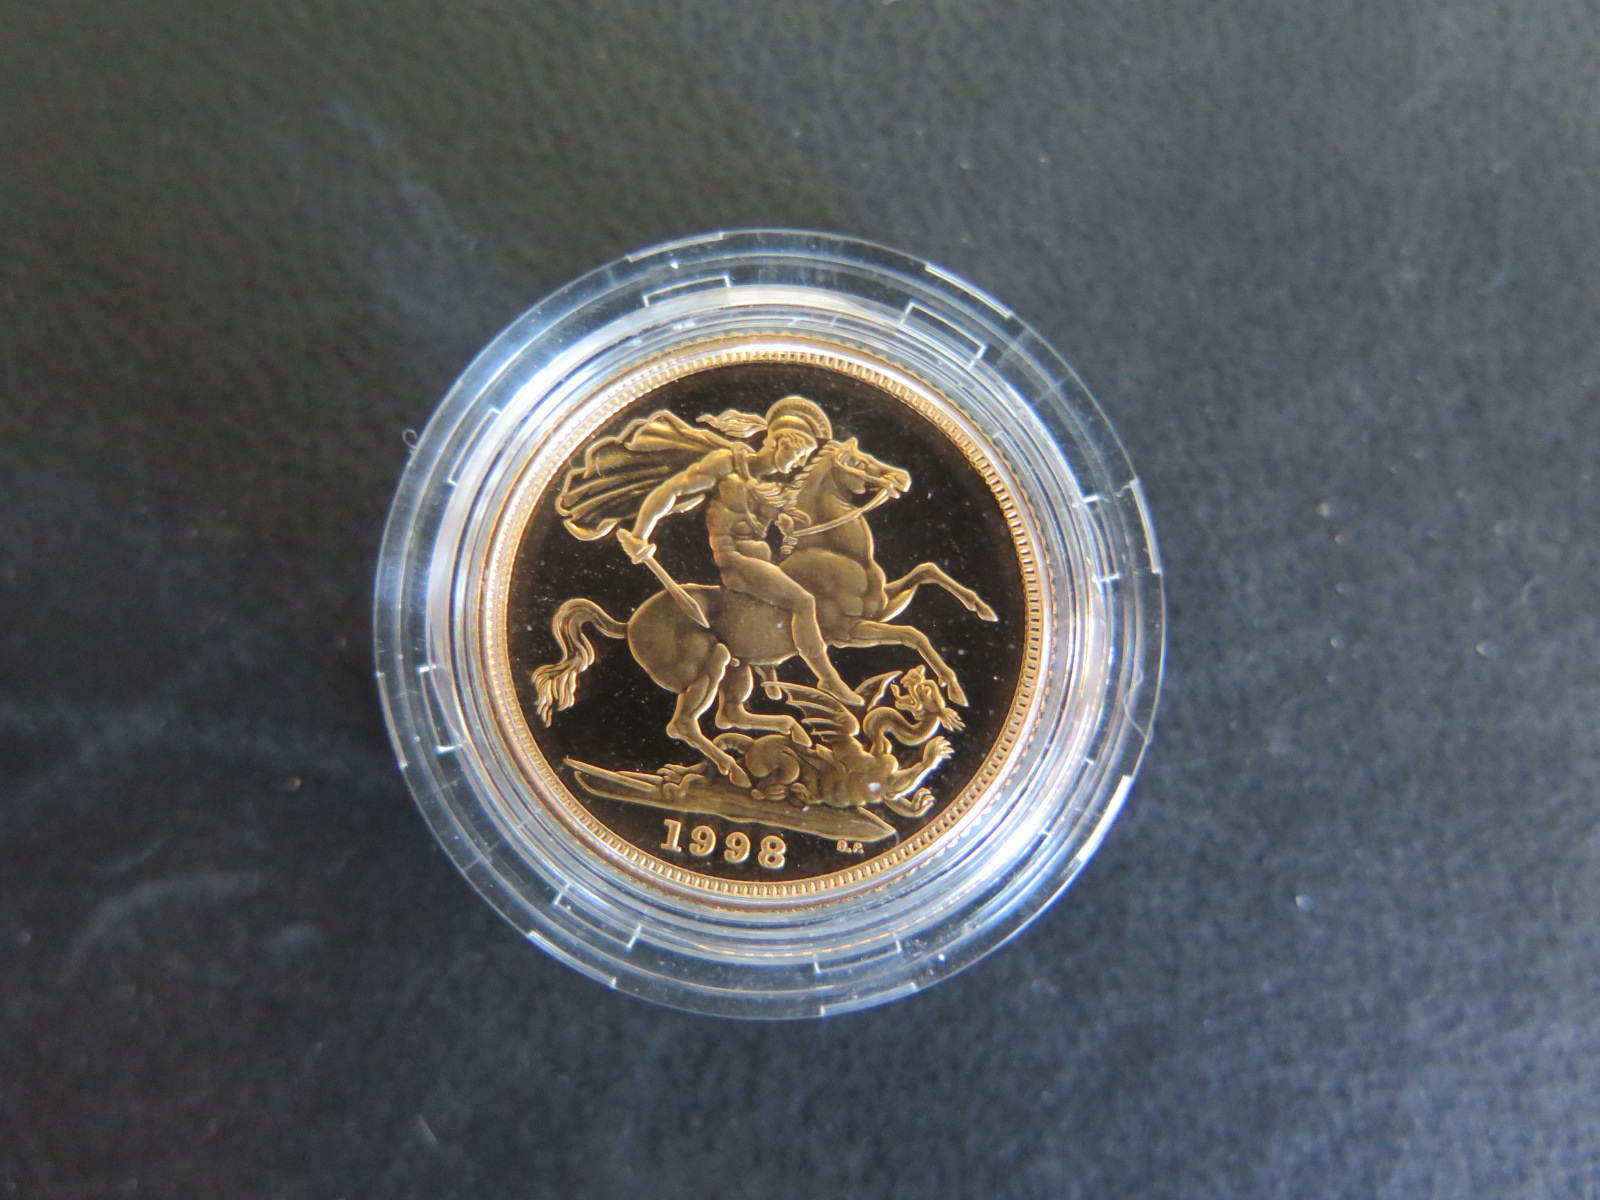 Elizabeth II gold full sovereign, boxed - Image 2 of 2